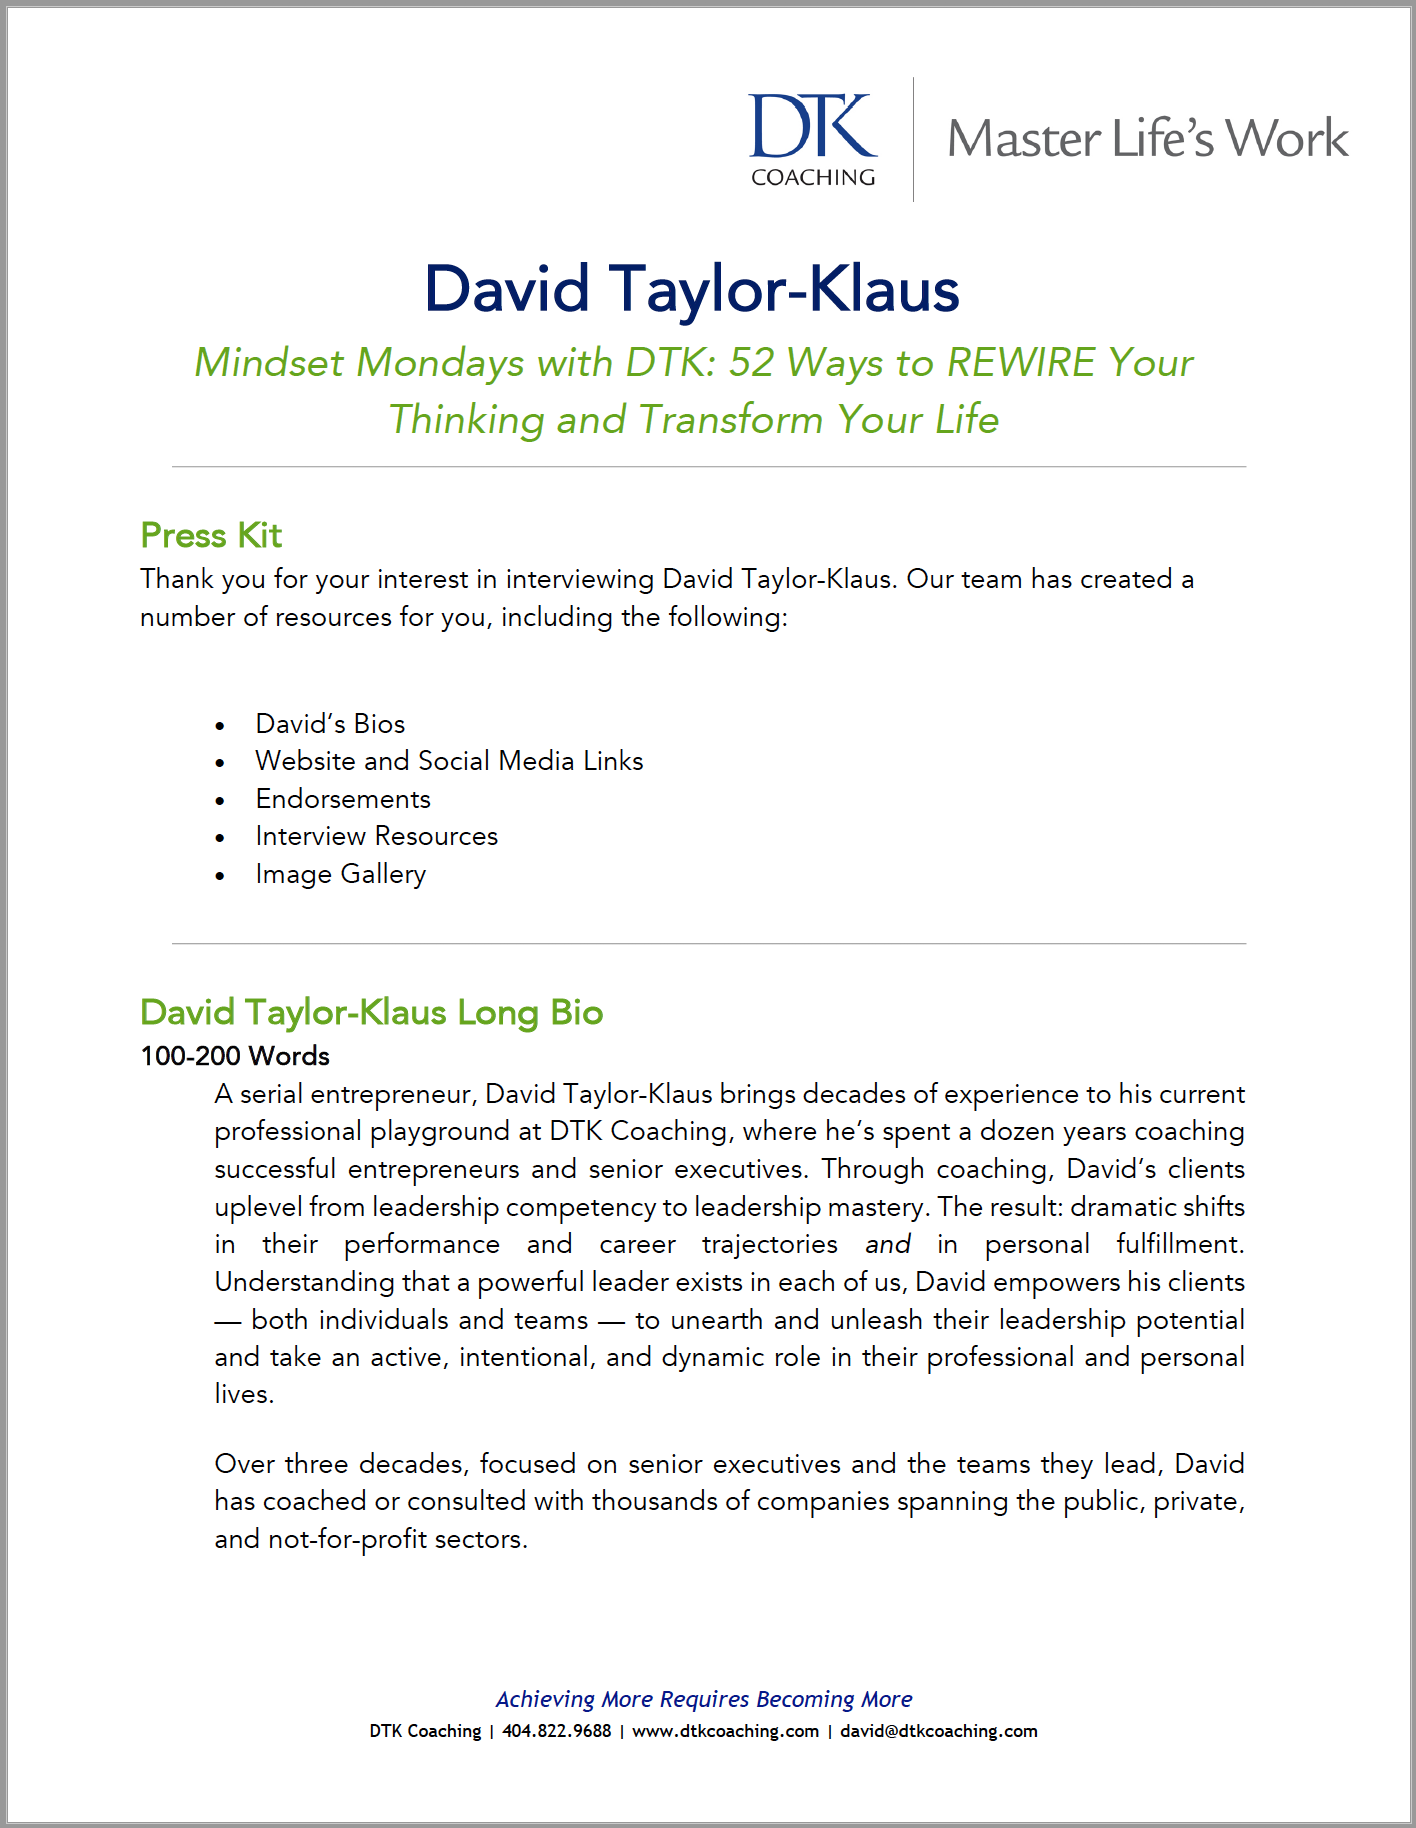 Press Kit for David Taylor-Klaus - 2020-07-23